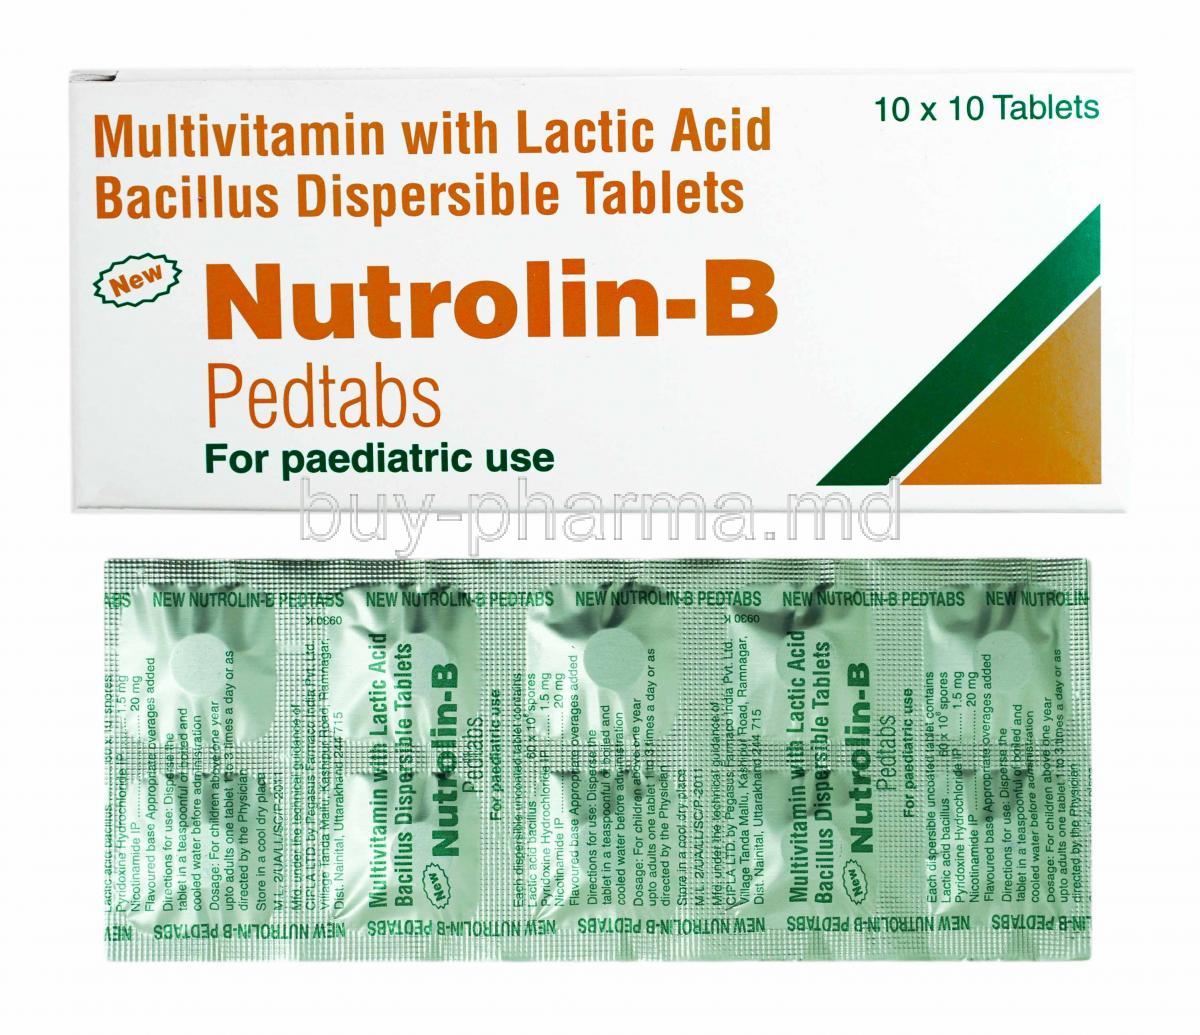 Nutrolin-B box and tablets